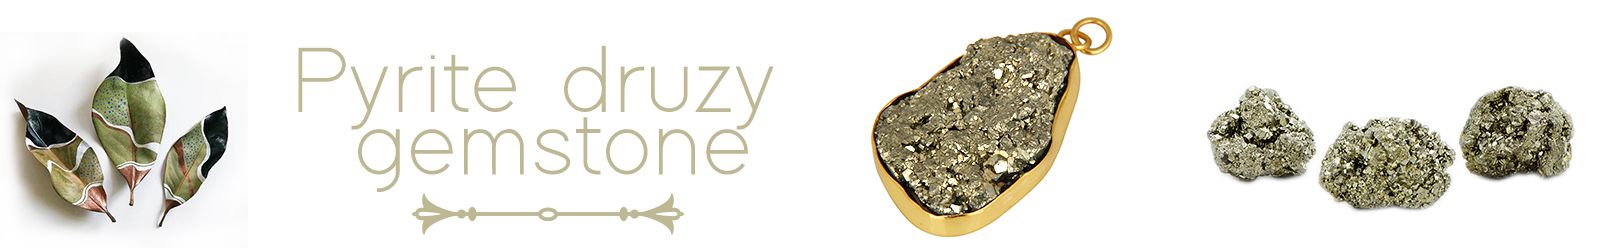 Online Pyrite Druzy Gemstone Silver Jewelry Store, Shop in Jaipur